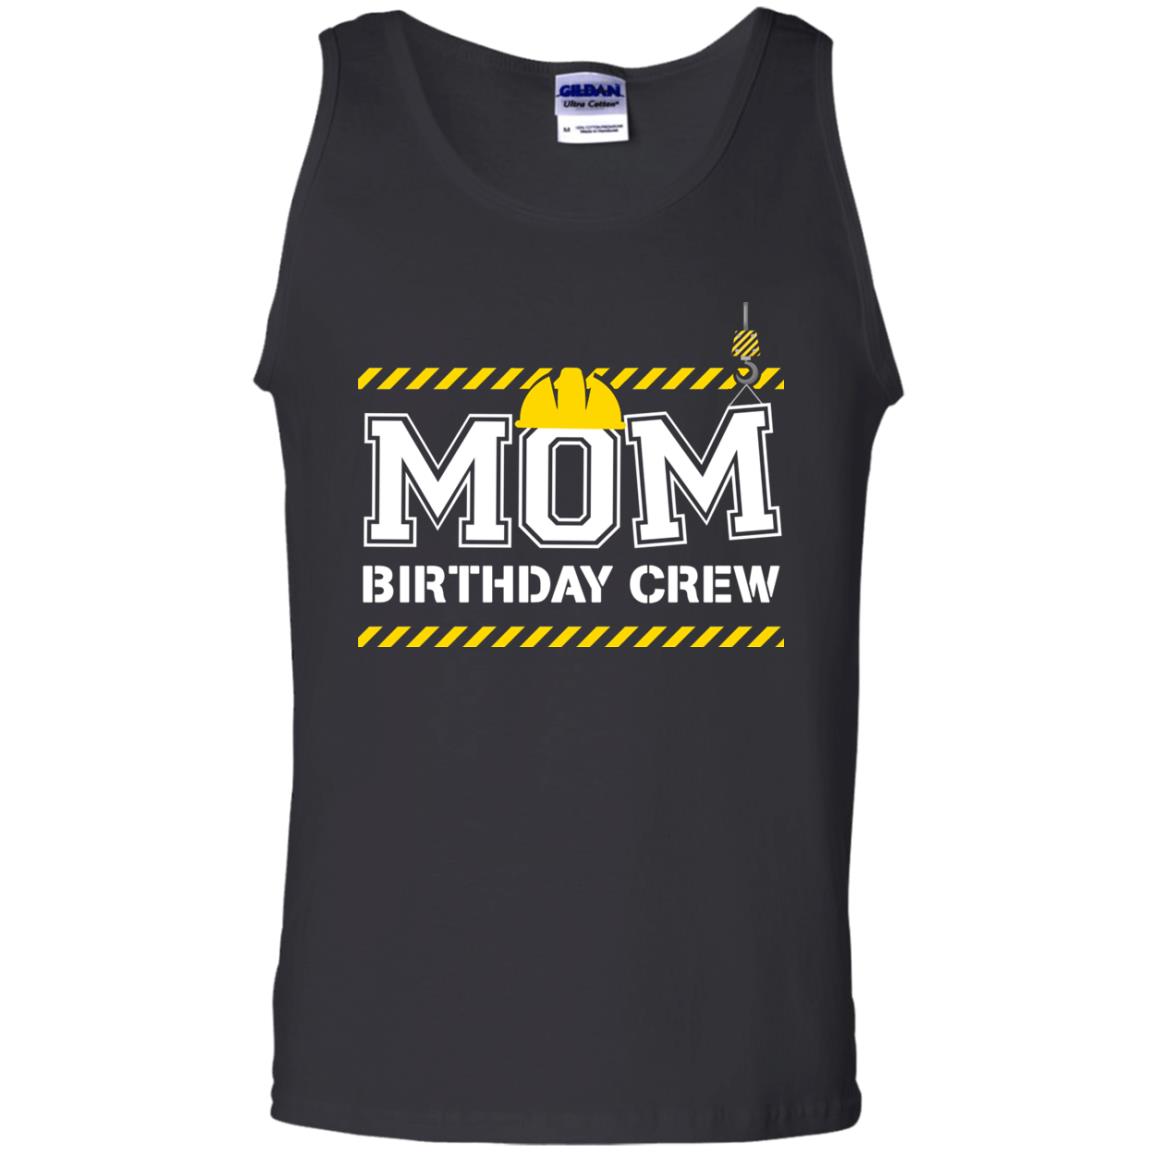 Mom Birthday Crew Construction Worker Shirt For MommyG220 Gildan 100% Cotton Tank Top